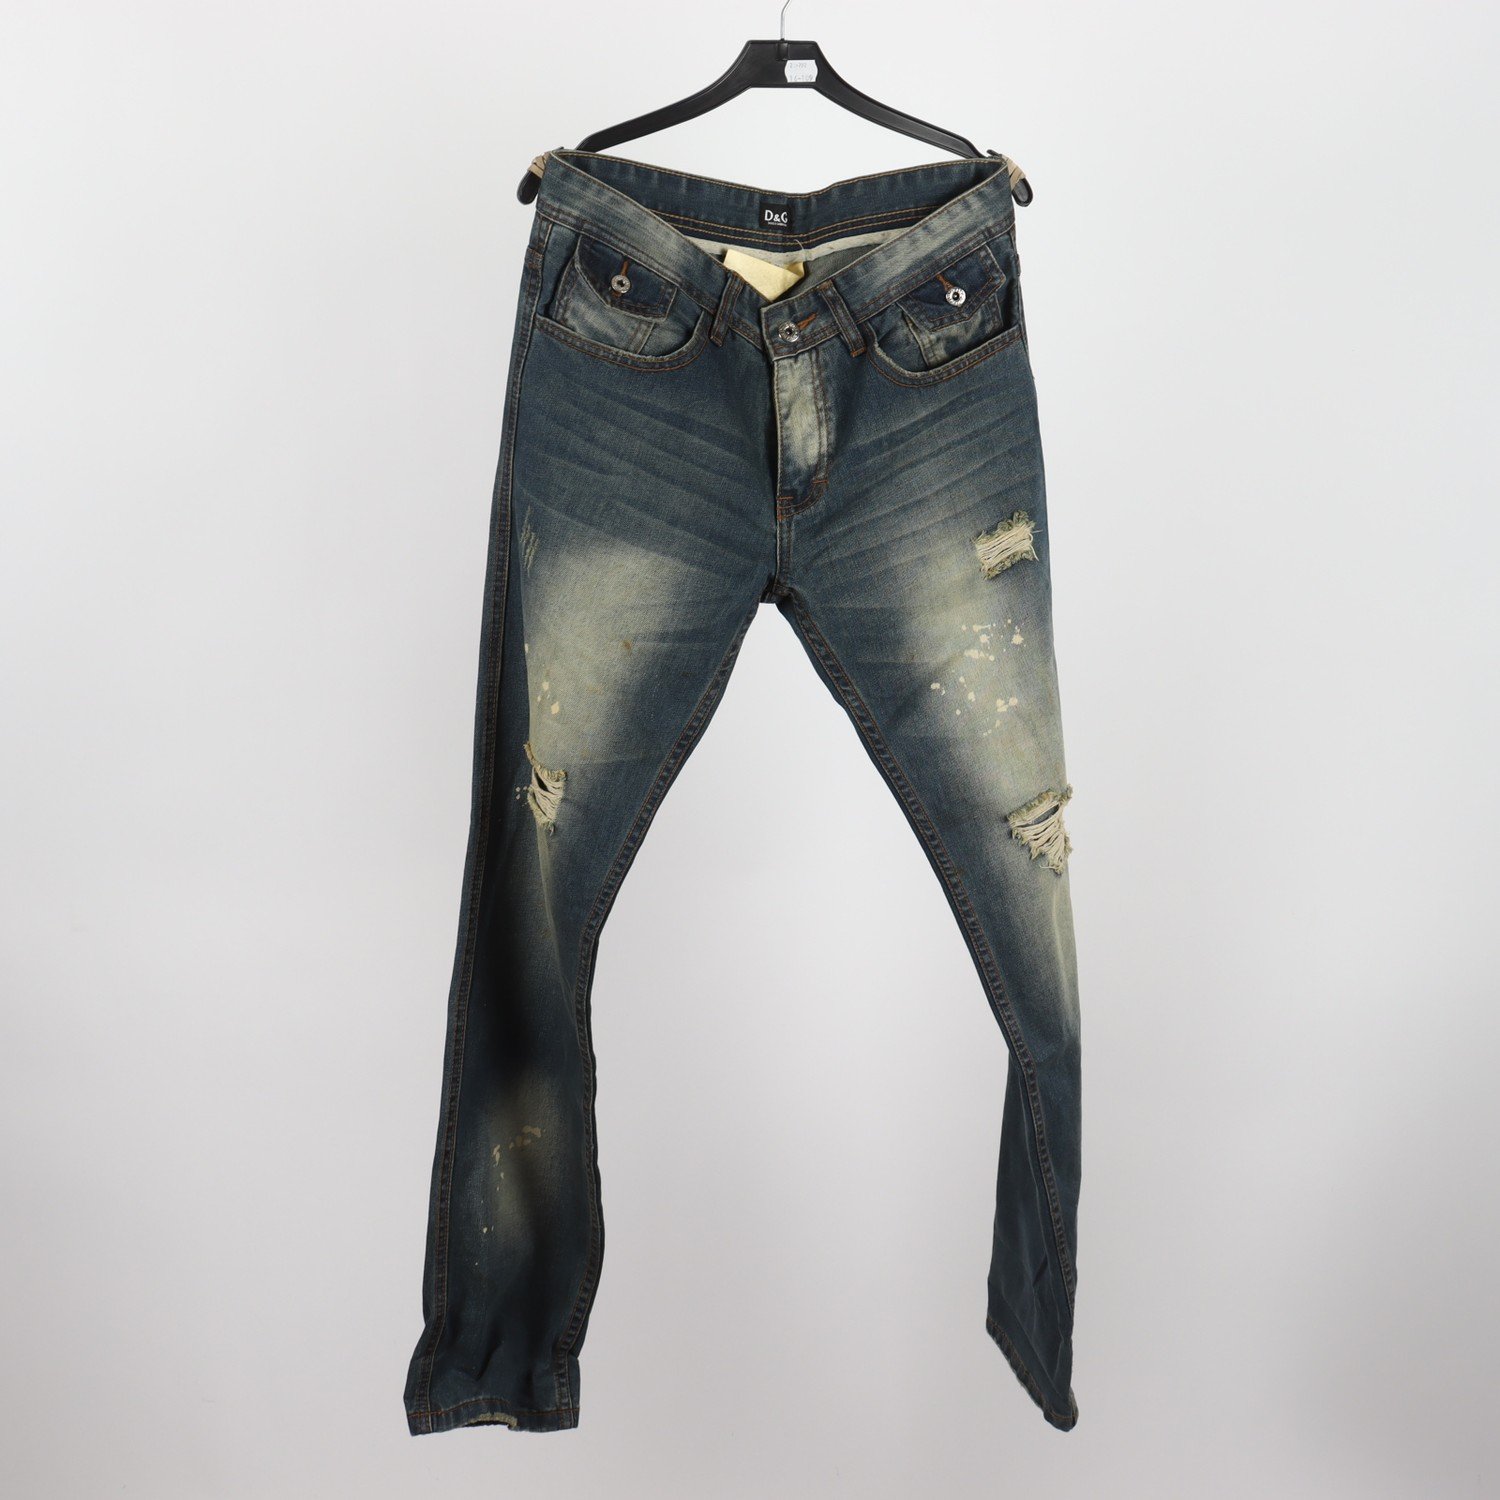 Jeans, Dolce & Gabbana, vintage, stl. 31″